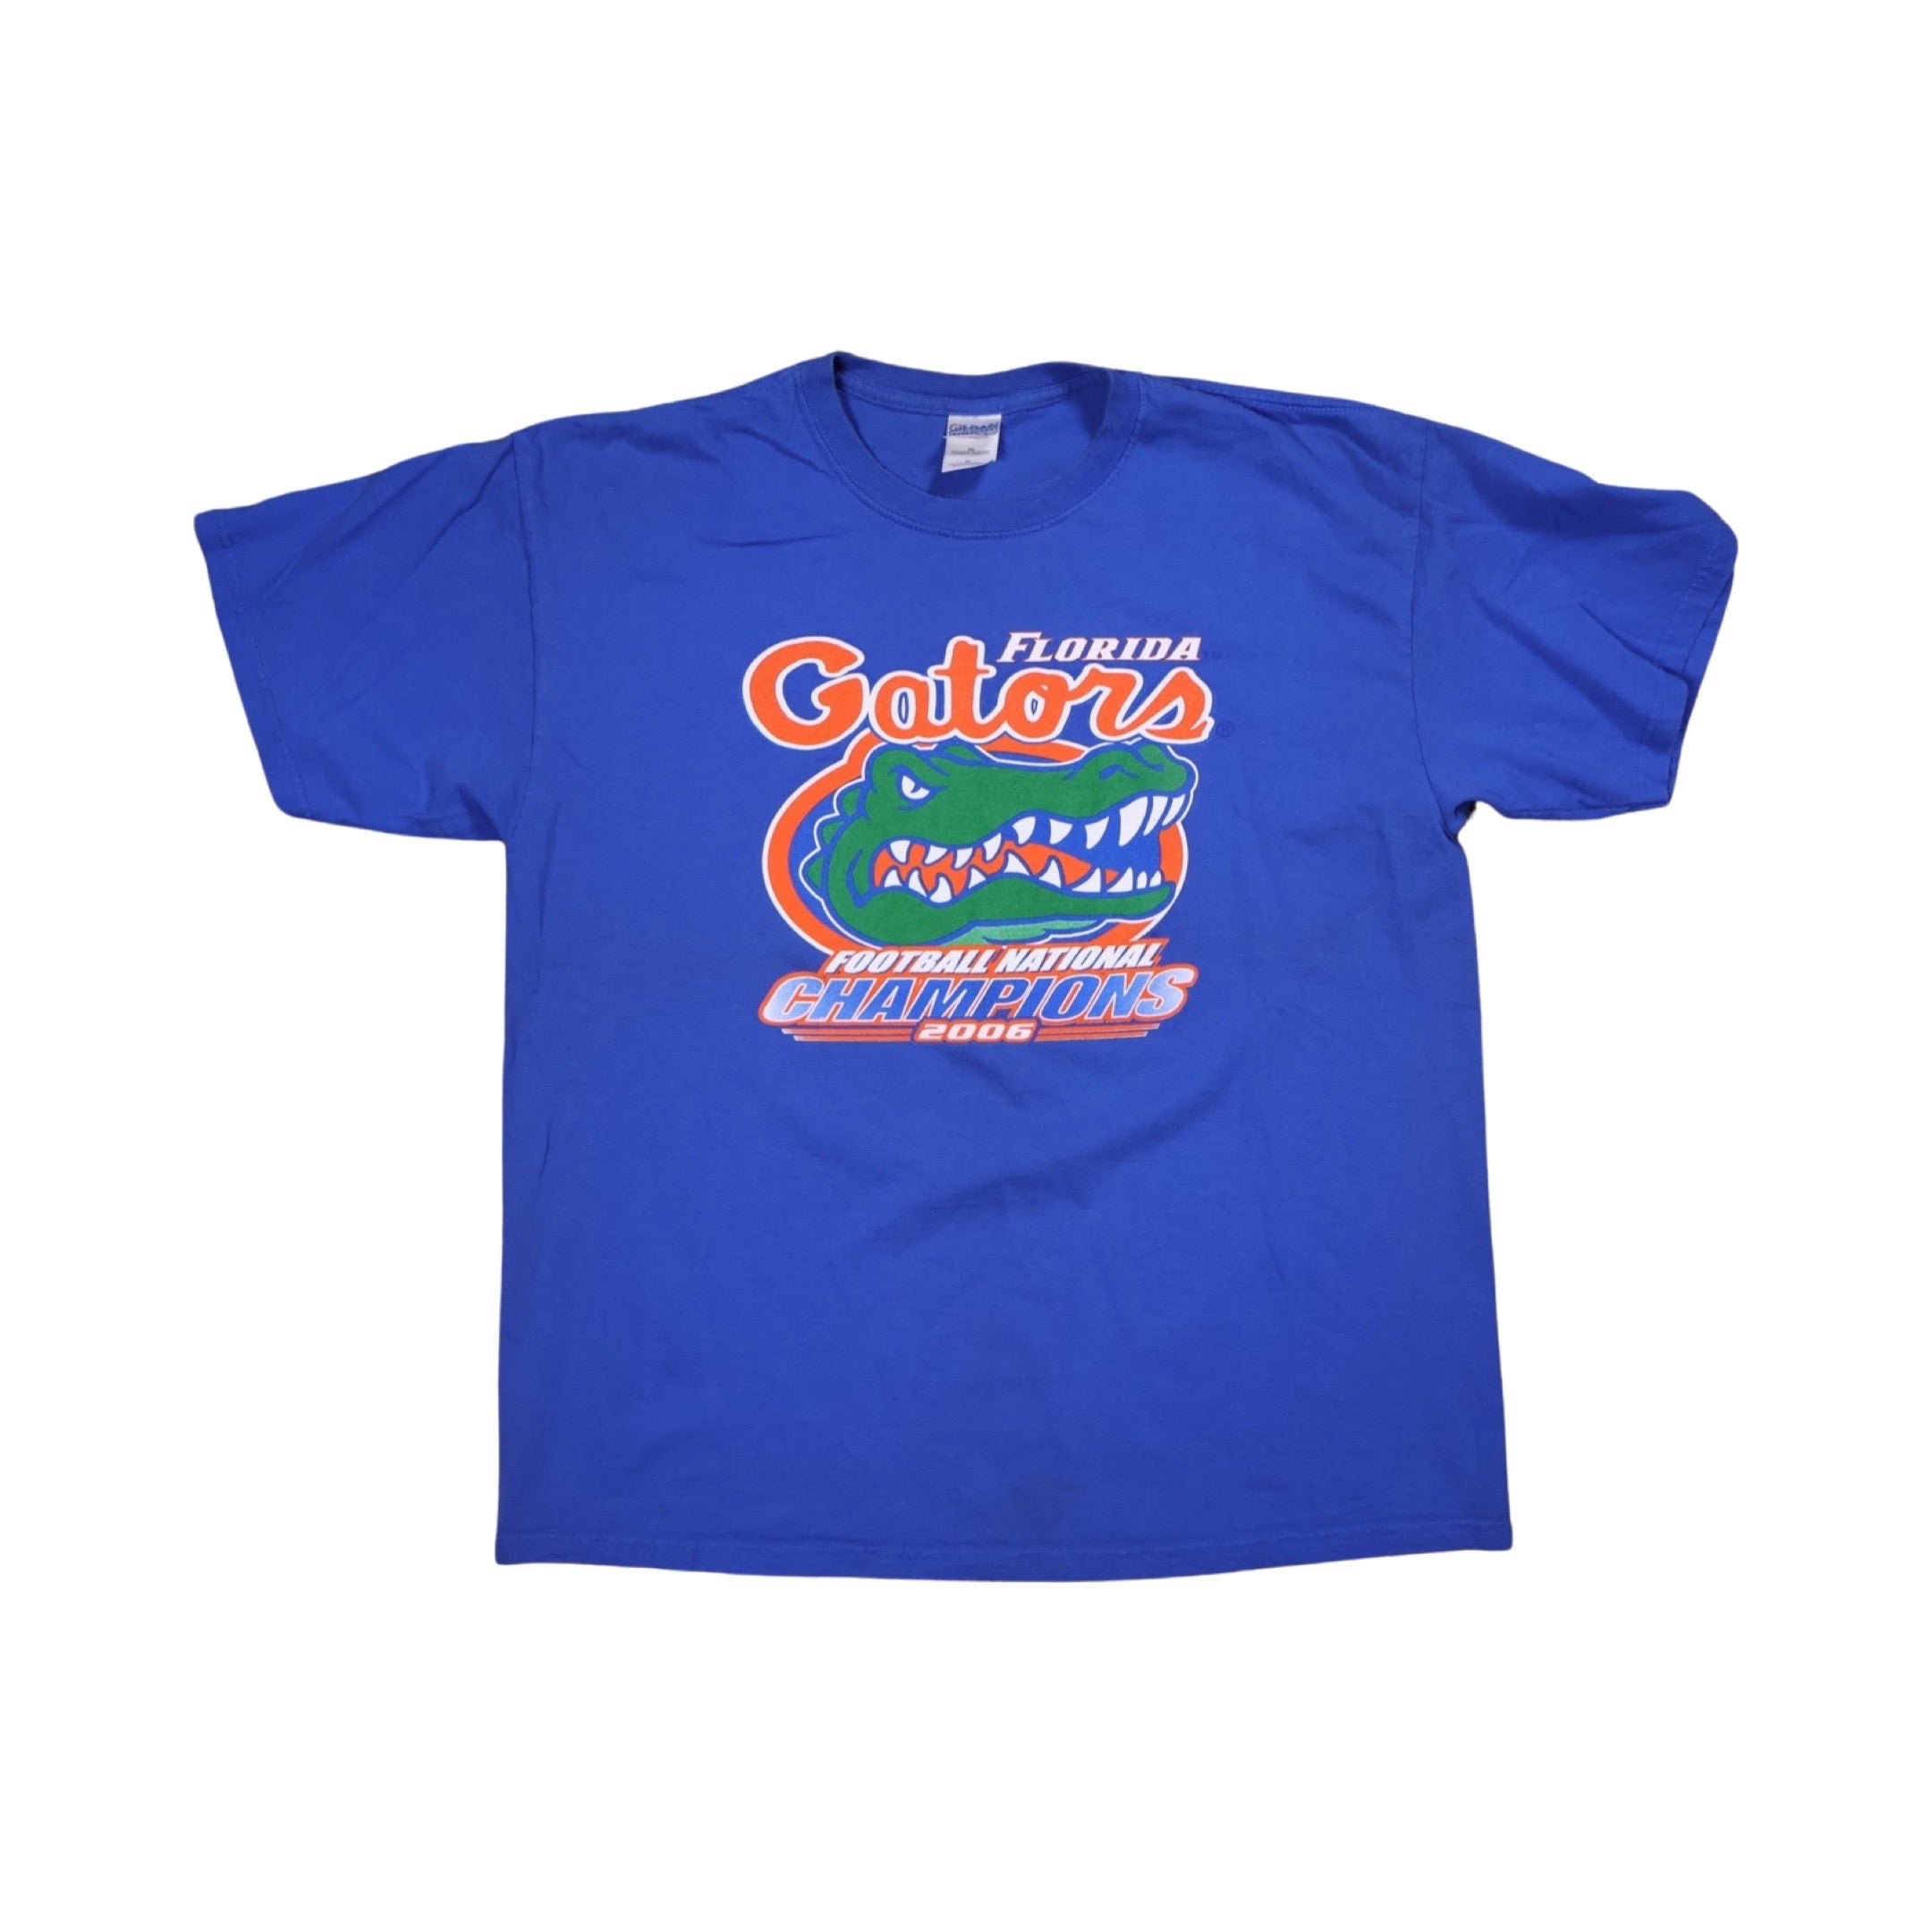 Florida Gators 2006 National Champs T-Shirt (XL)